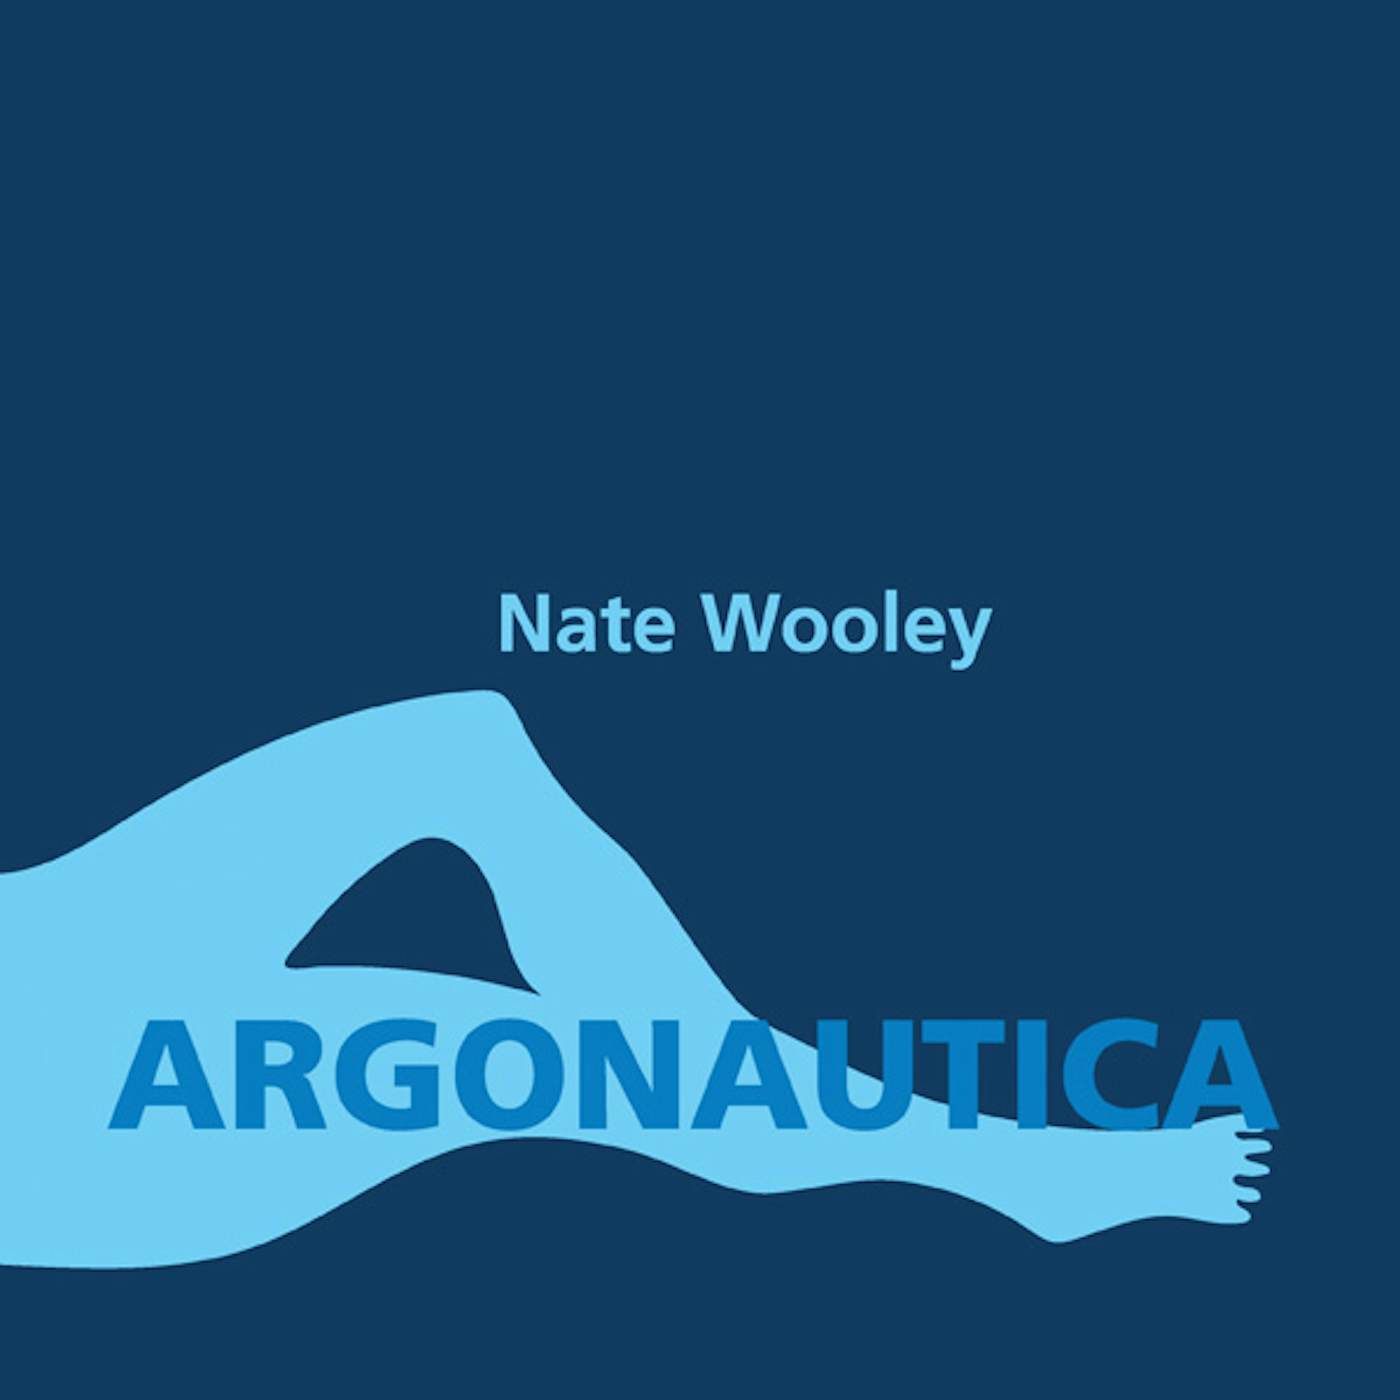 Nate Wooley 98332 ARGONAUTICA CD